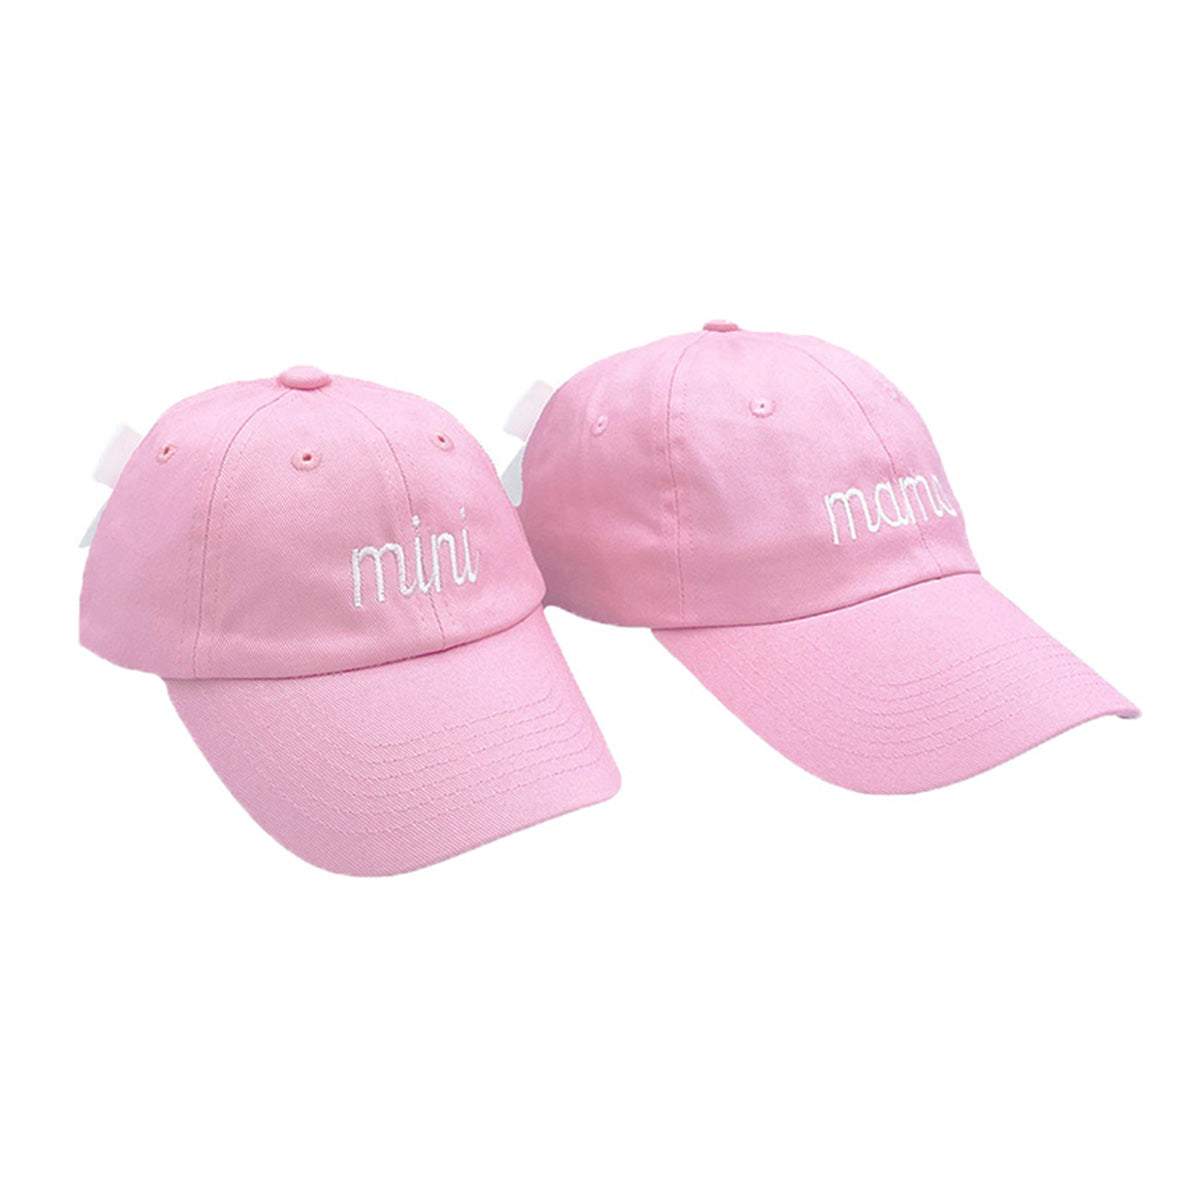 Mama + Mini Pink Baseball Hat Set for Baby and Mom